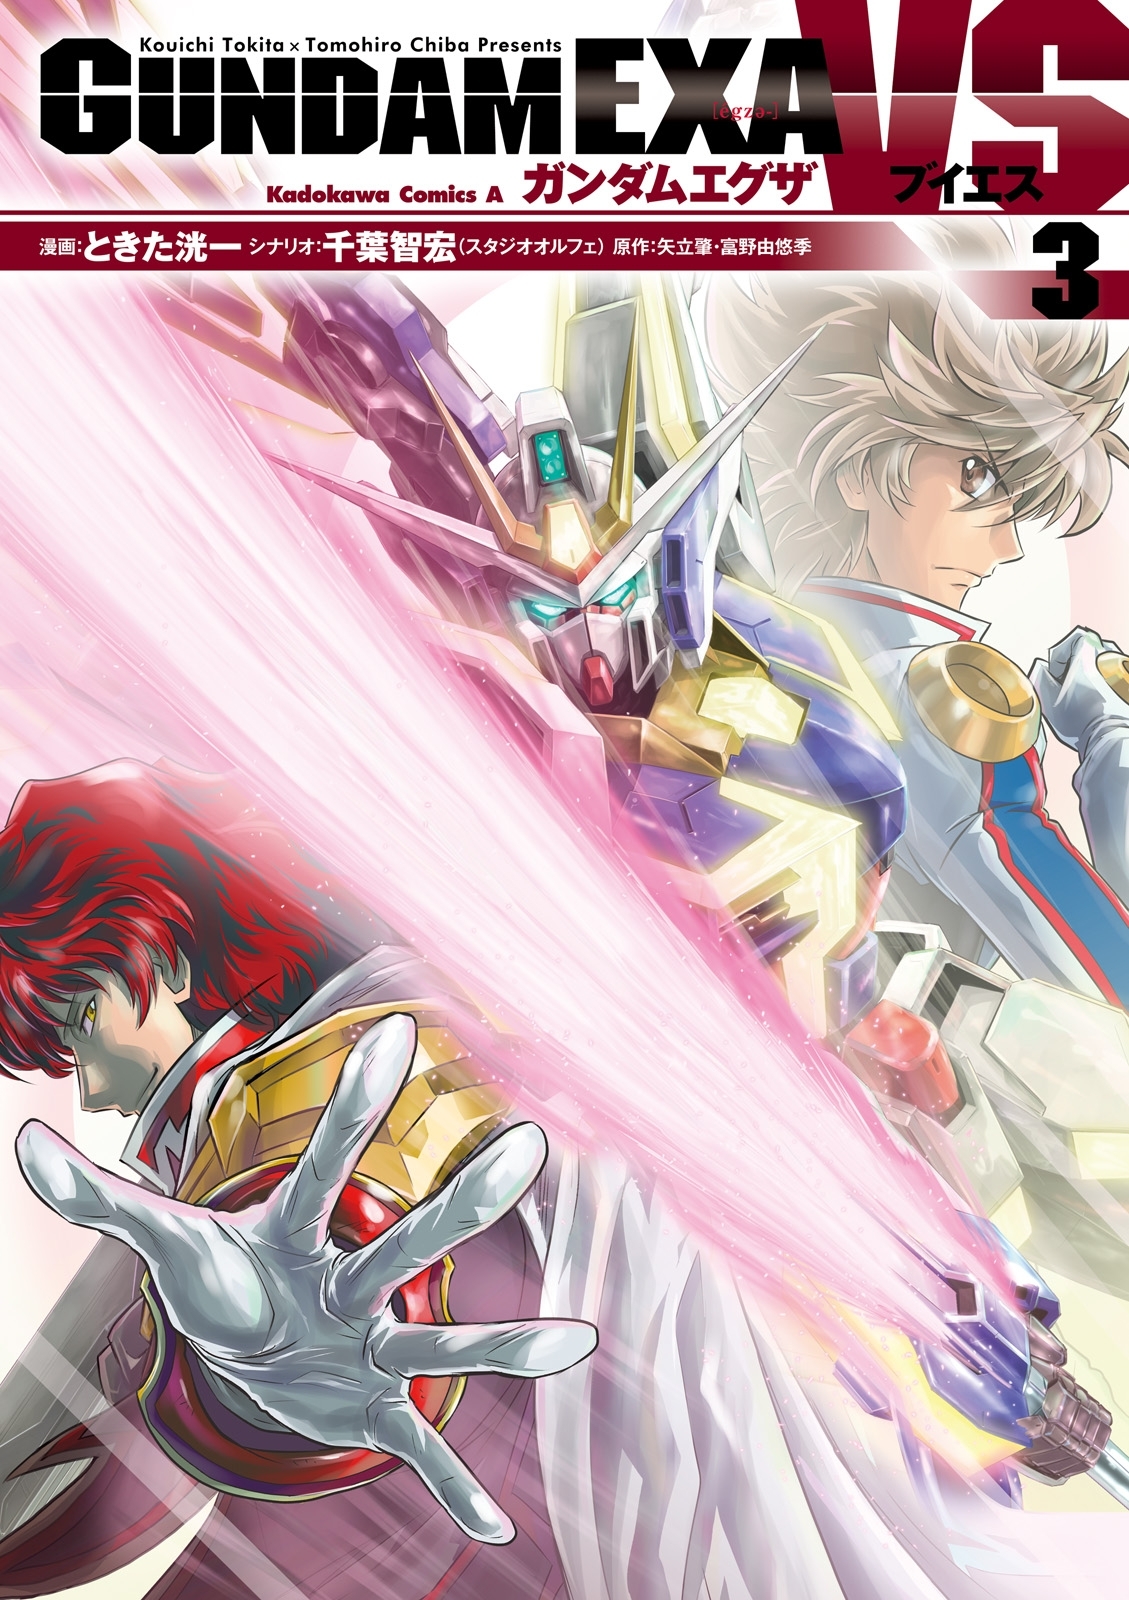 Gundam Exa Vs 3 無料 試し読みなら Amebaマンガ 旧 読書のお時間です